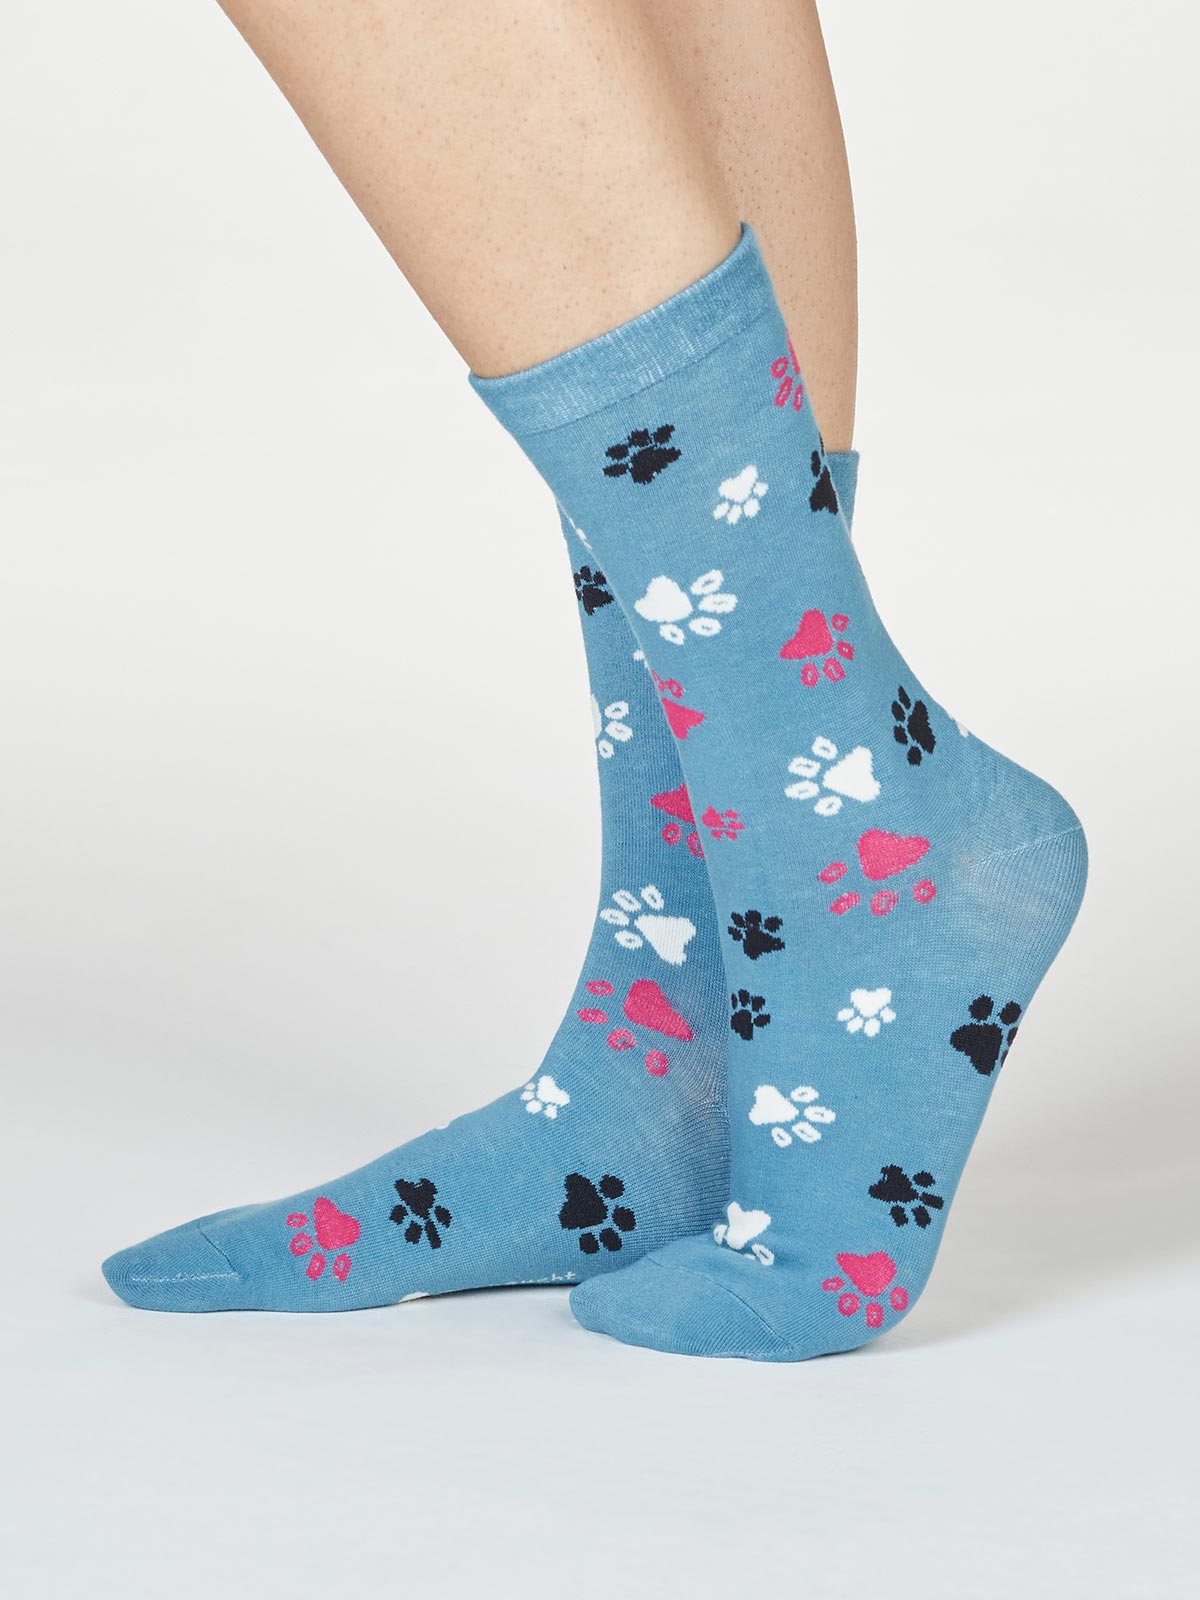 Damen-Socken Elsa Paw Print in River Blue 